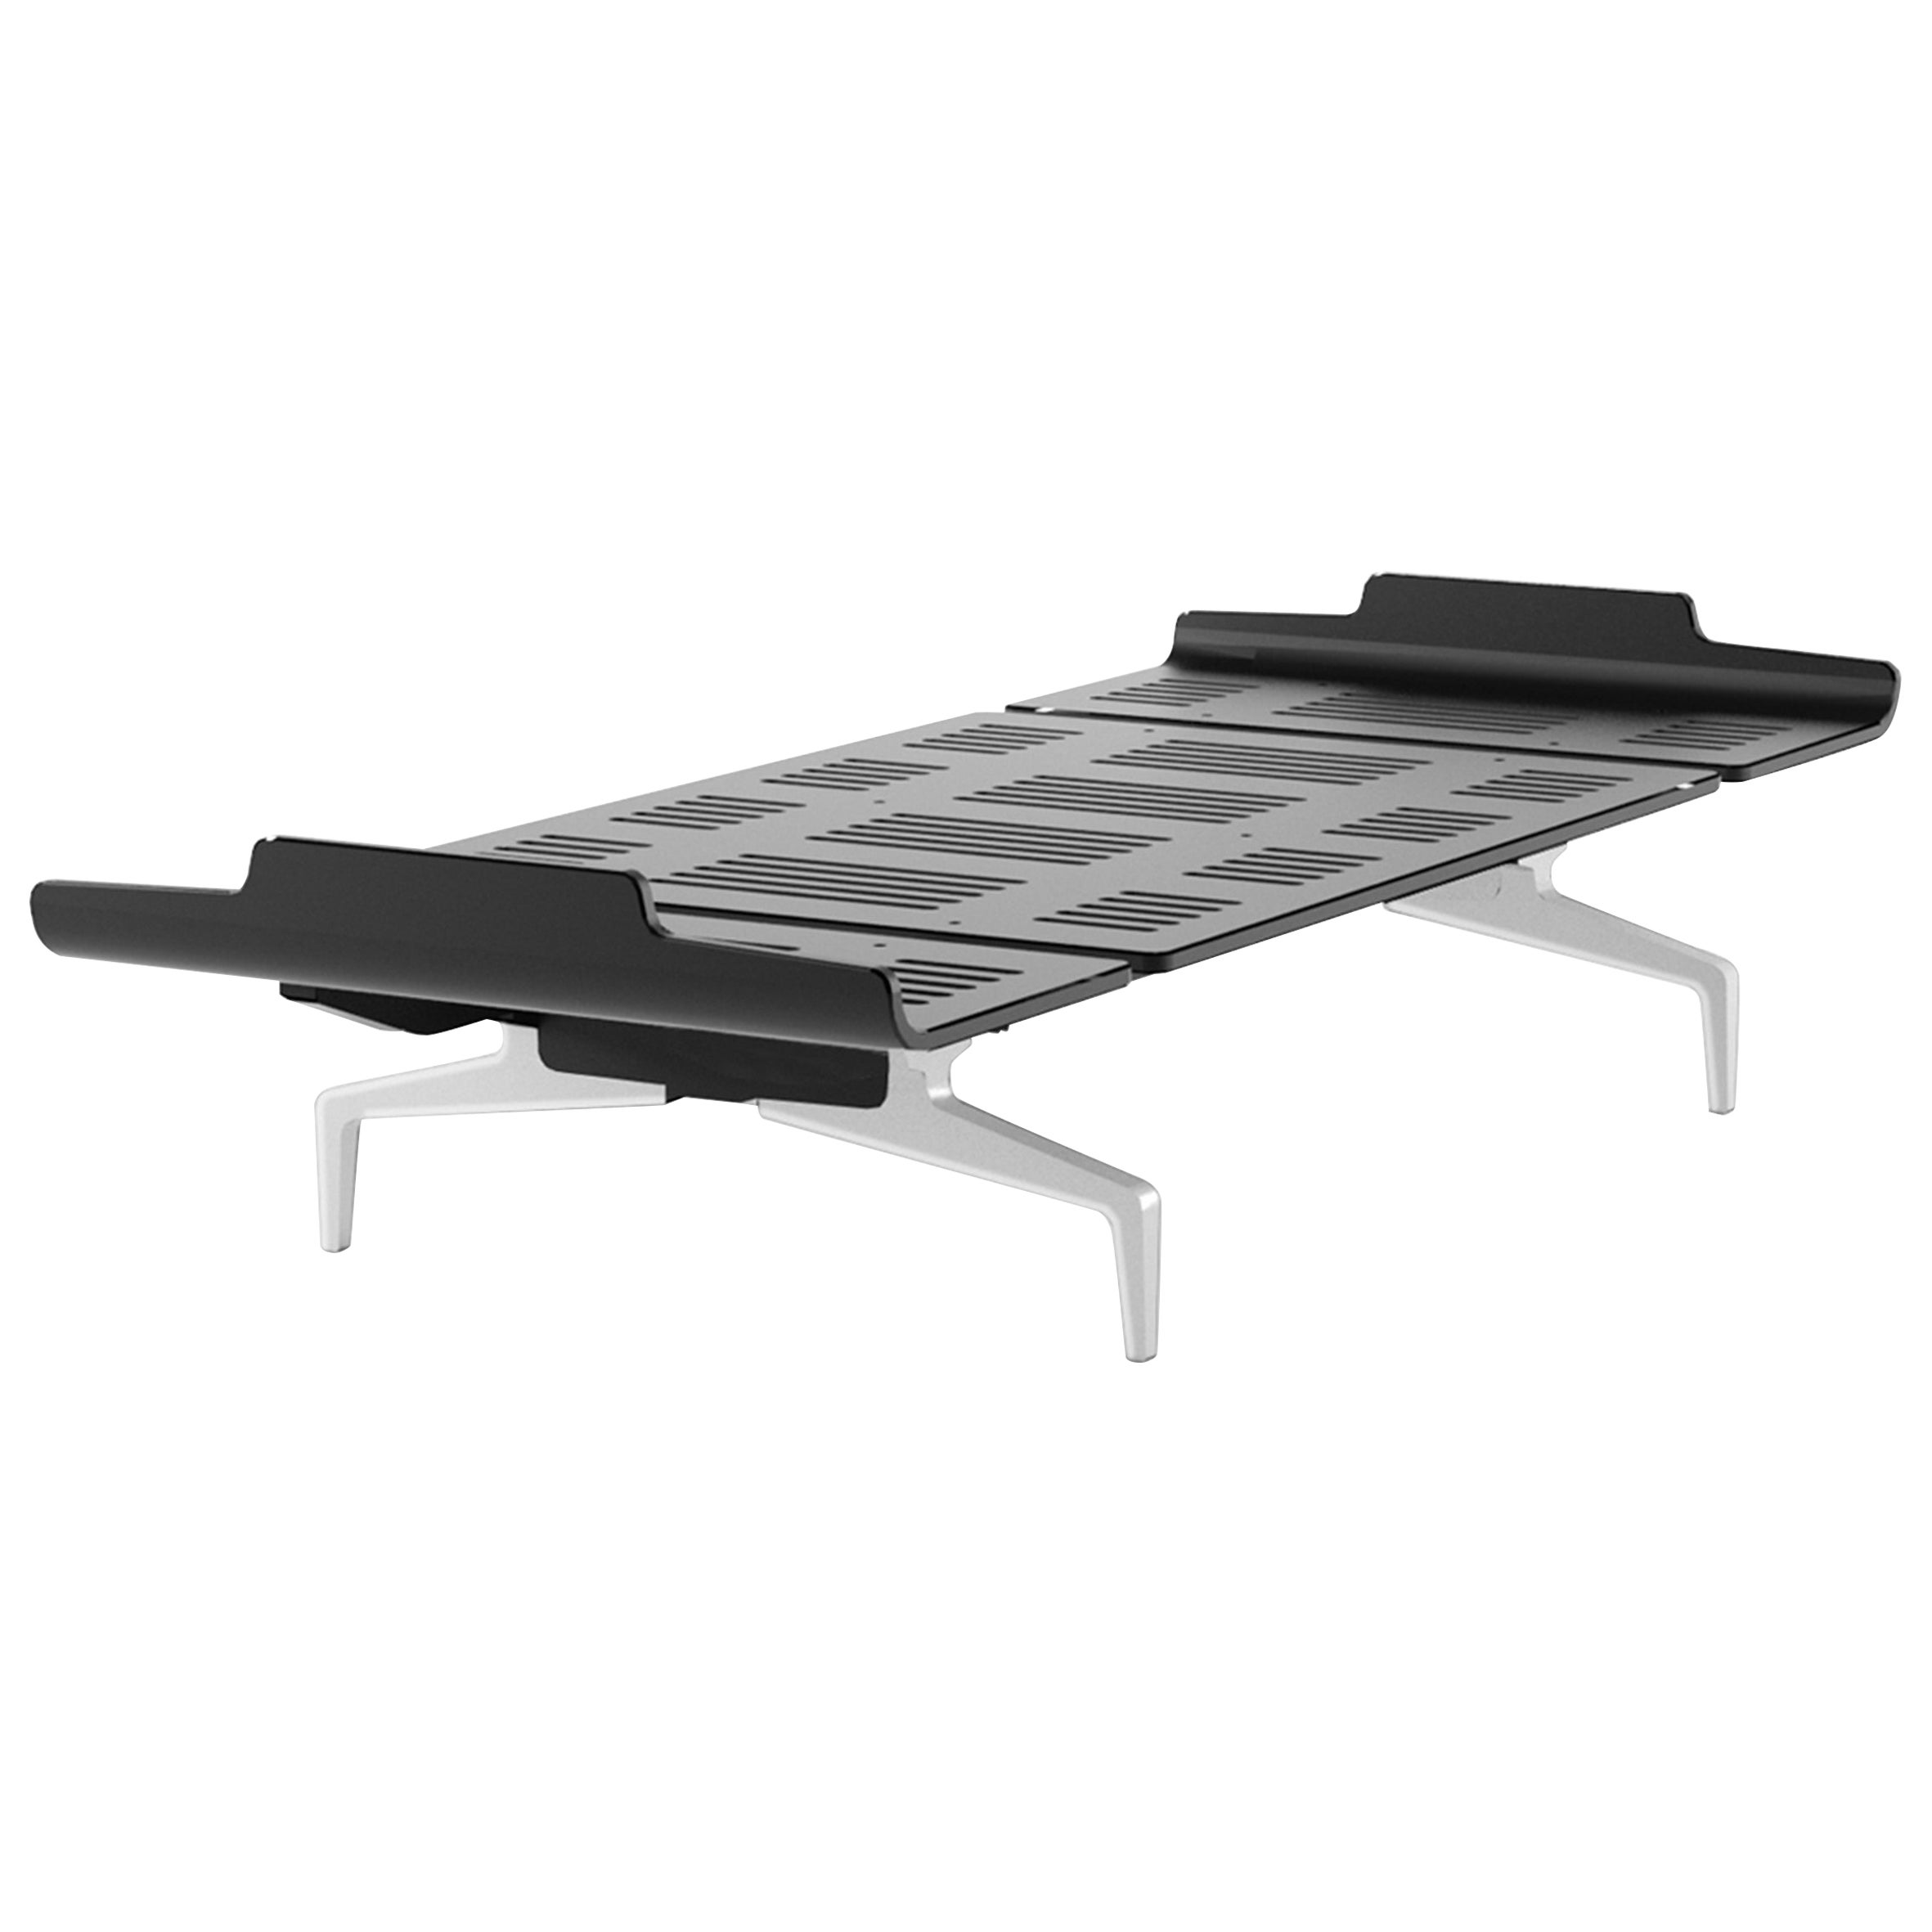 Alias Medium LL1 Legnoletto Bett in schwarzem Mattlack mit Aluminiumrahmen